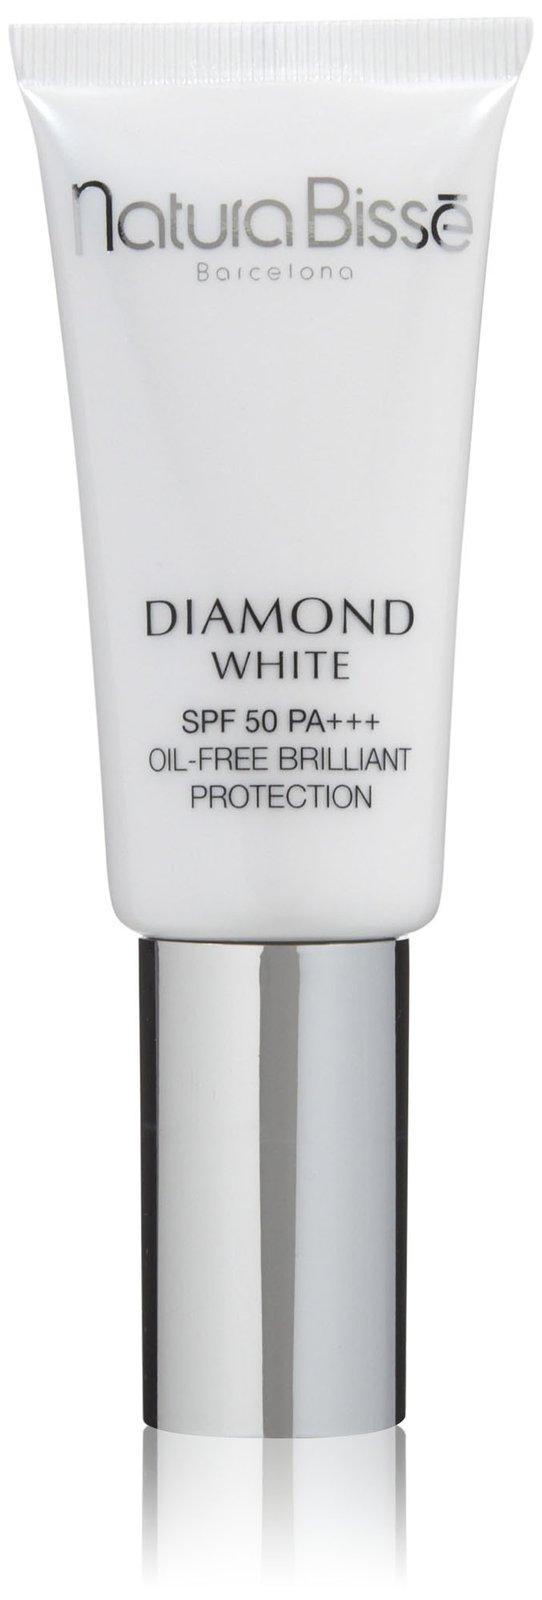 Natura Bisse Diamond White Spf 50 Pa+++